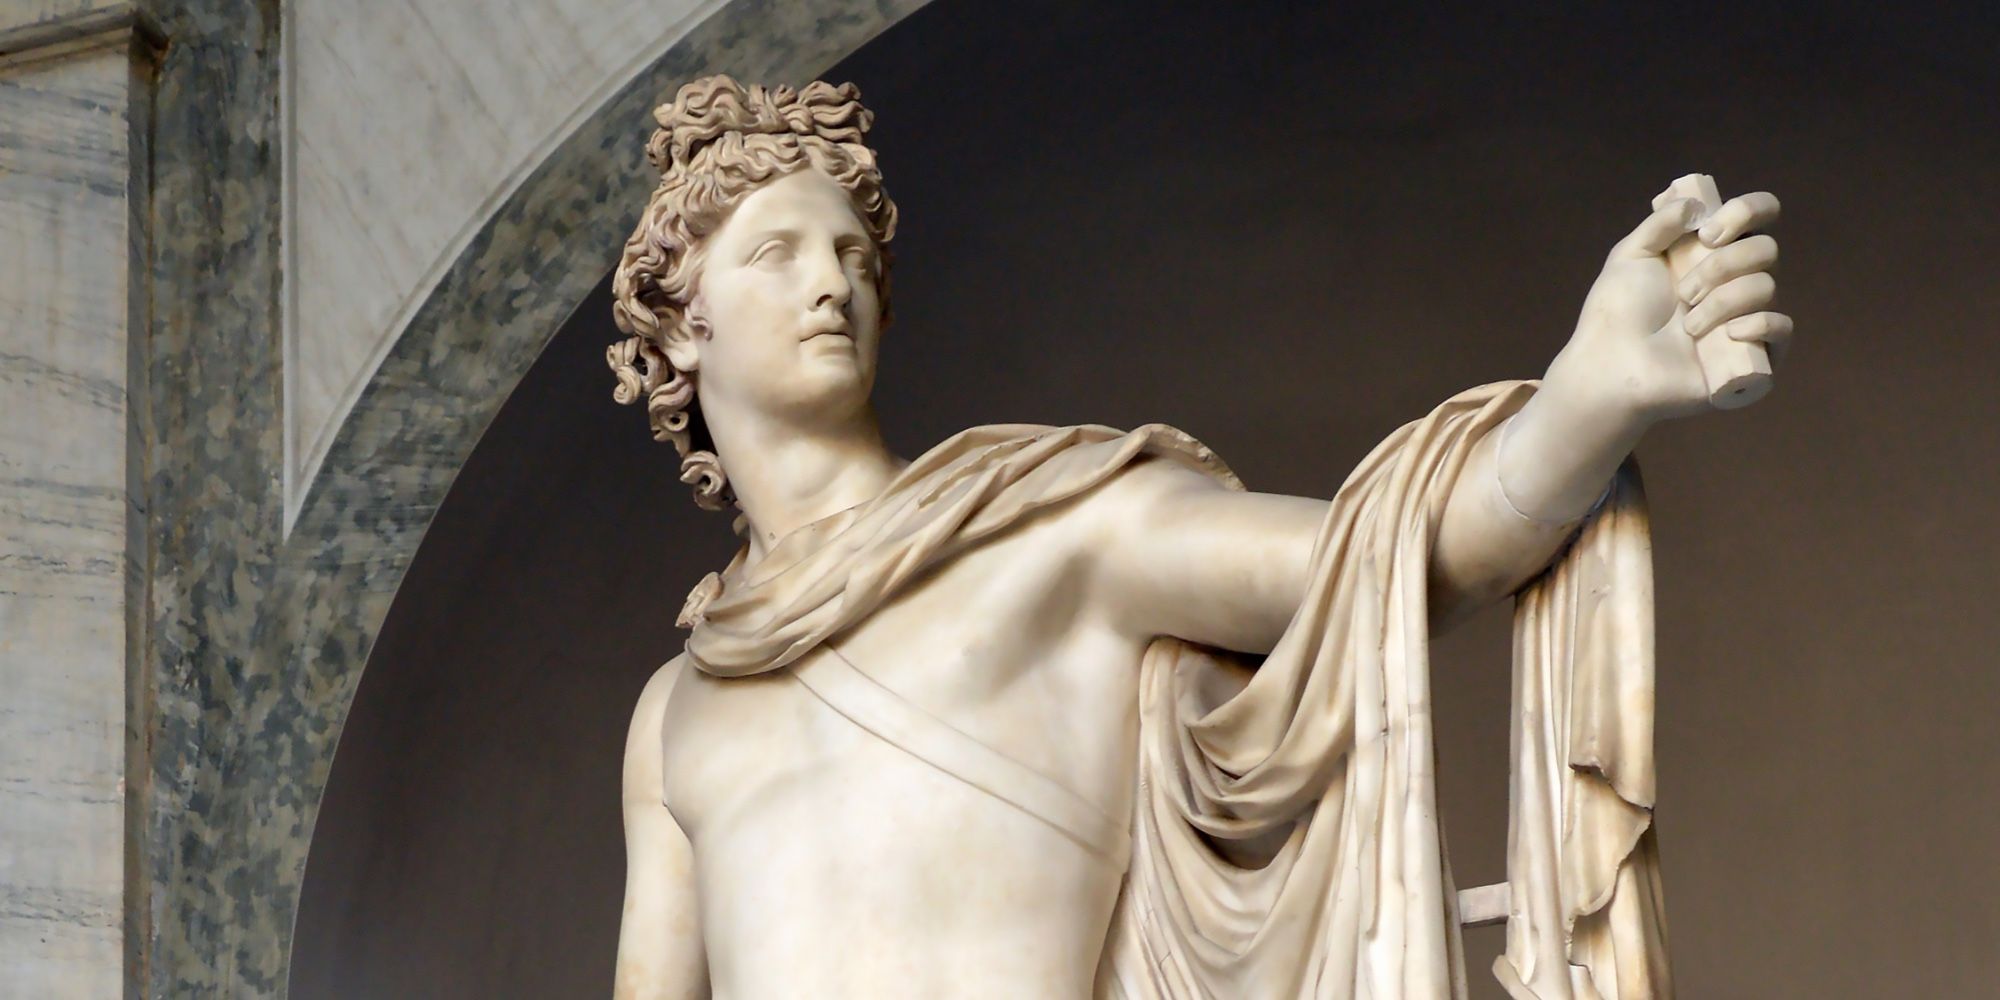 The Apollo Belvedere sculpture at Vatican Museums, Vatican City